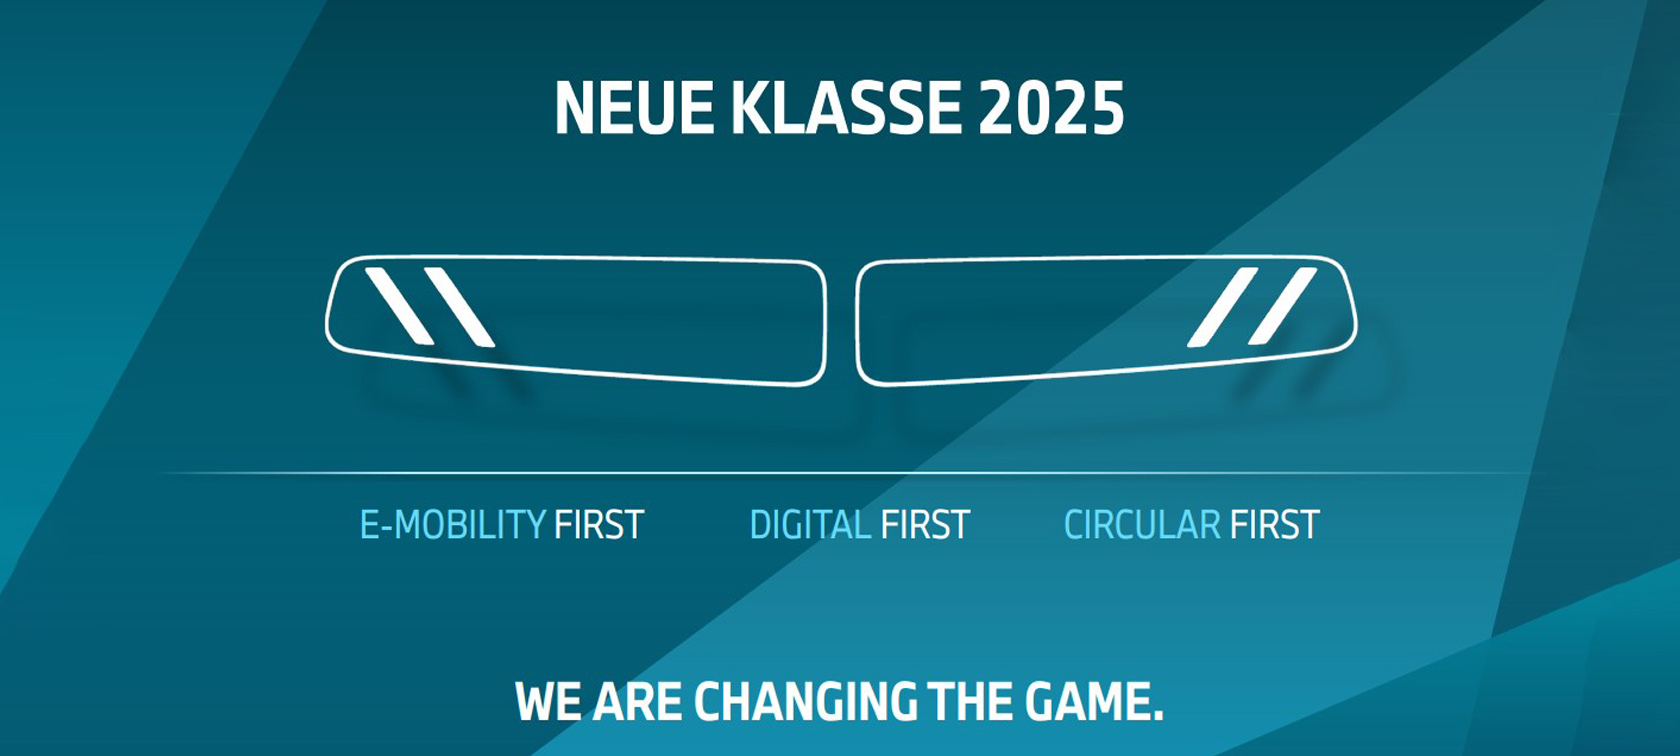 vision مبتنی بر Neue Klasse در نمایشگاه CES 2023 